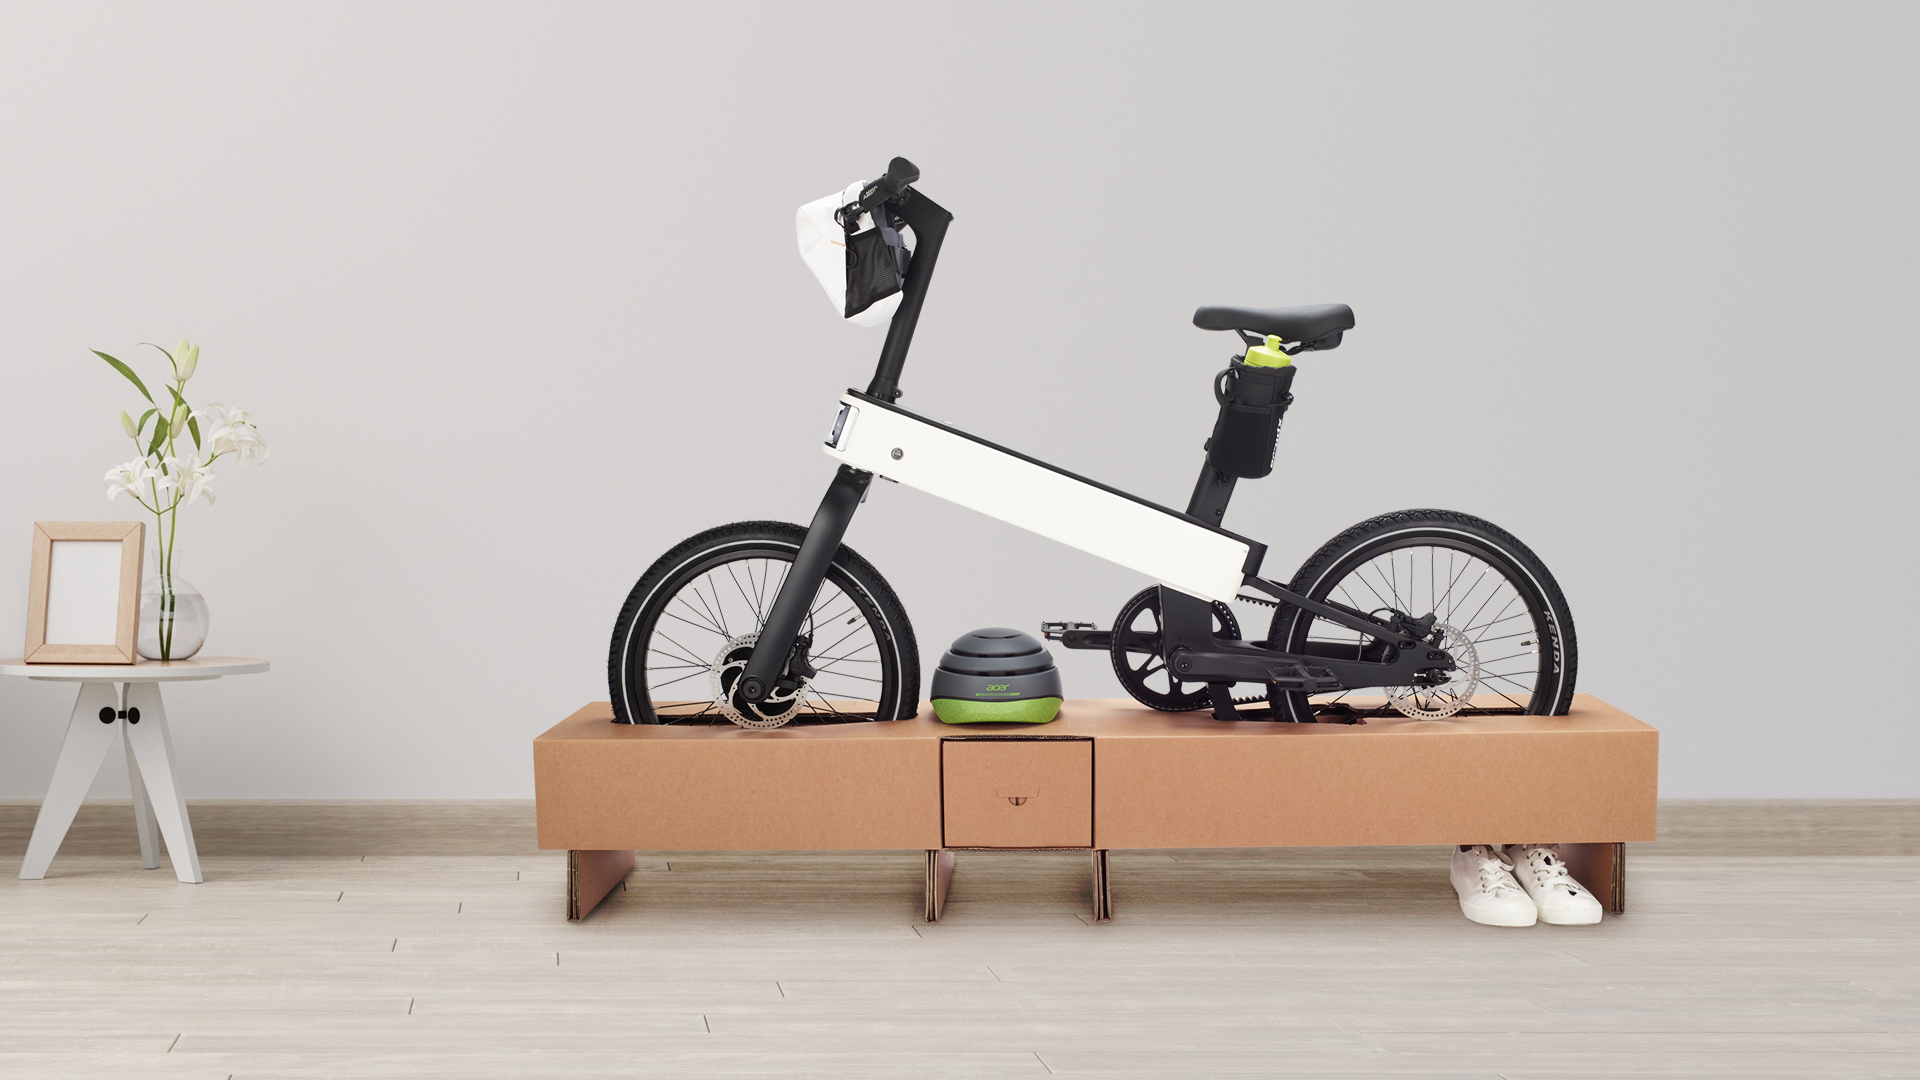 Acer ebii Smart Bike ECO-Friendly Packaging